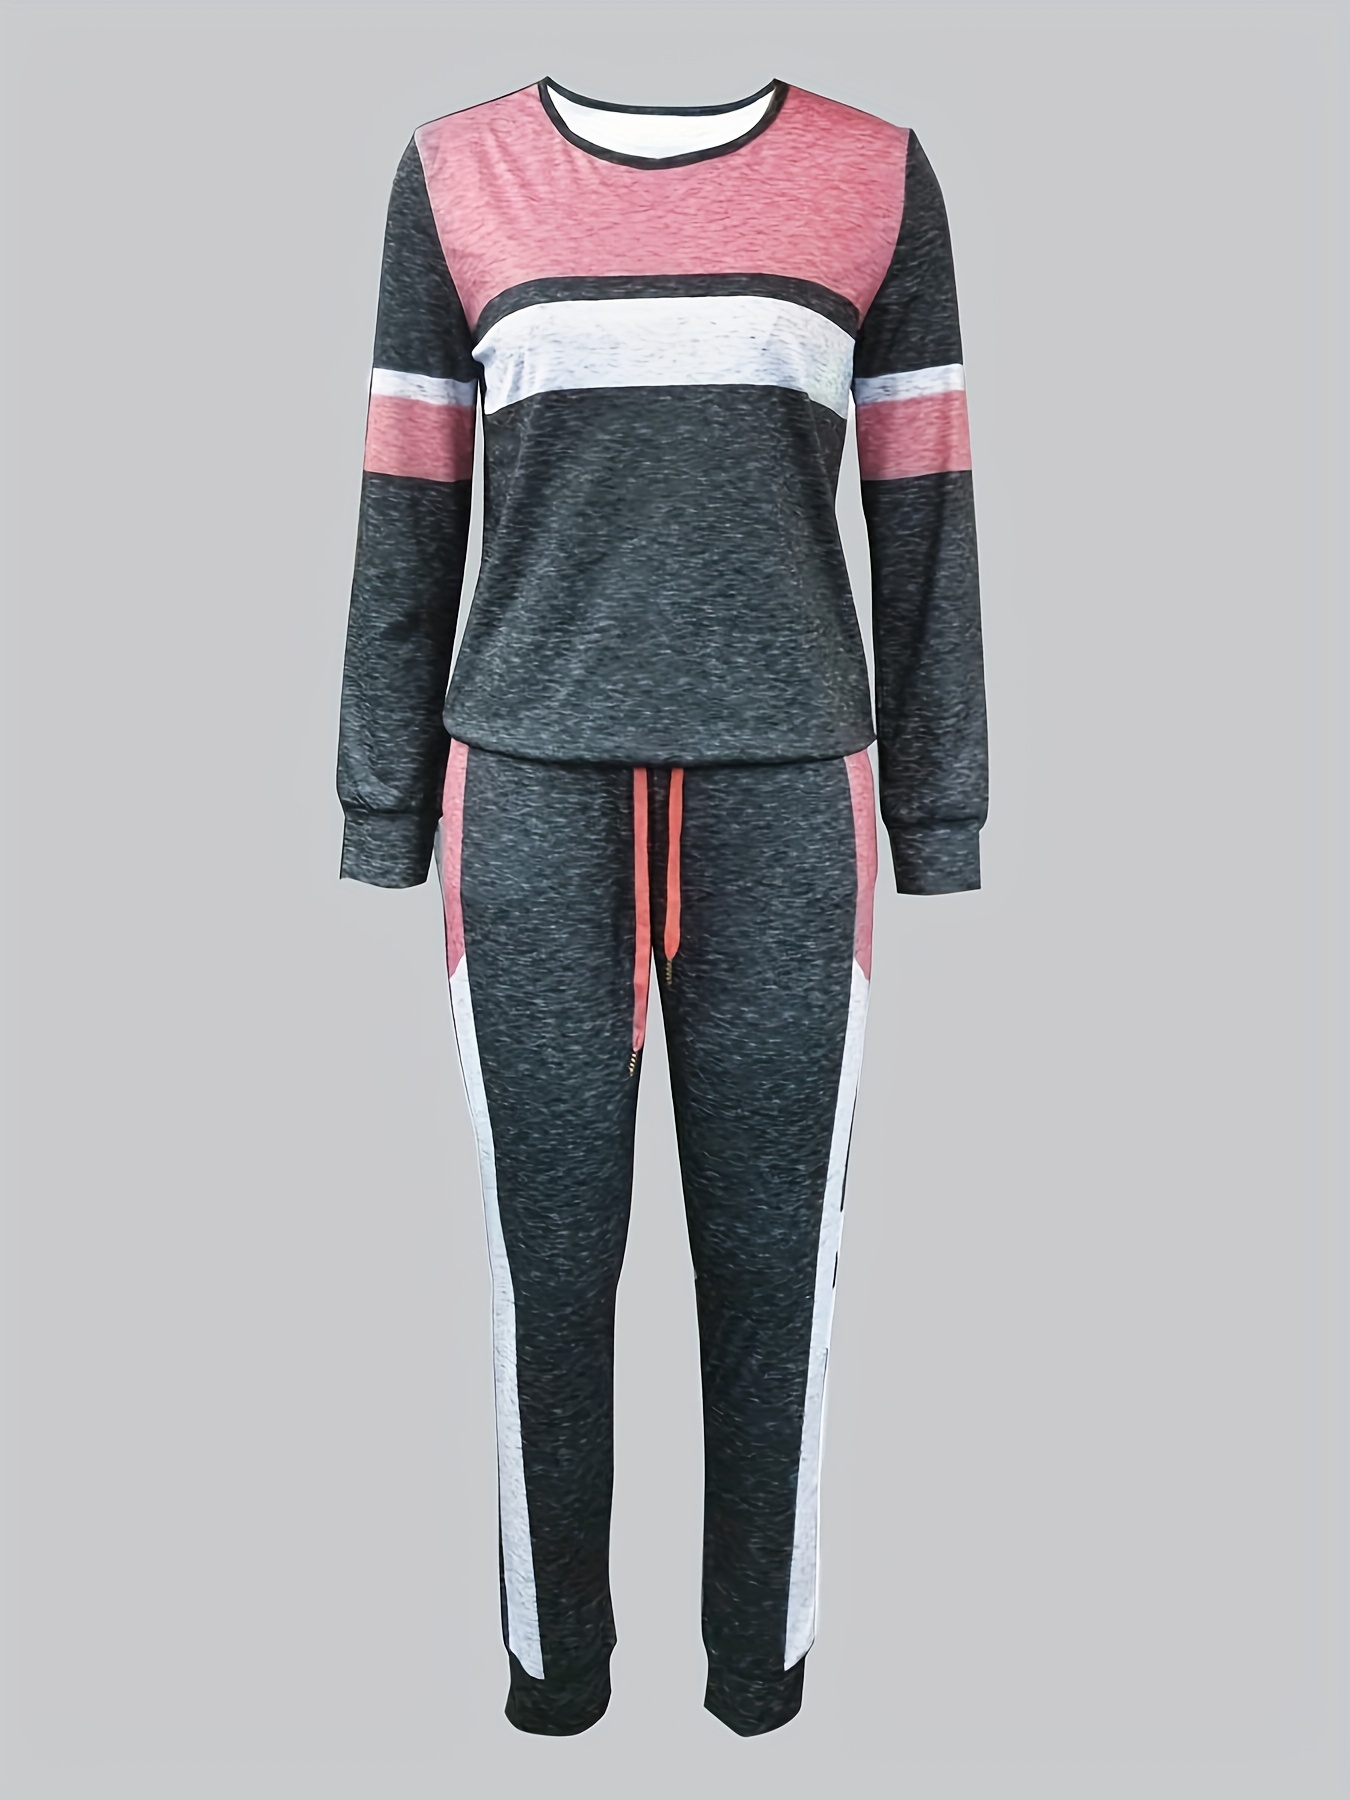 Women 2 Piece Jogger Outfits Sets Pink Crewneck Color Block T Shirt Top  Blouse And Jogger Pants Casual Tracksuits